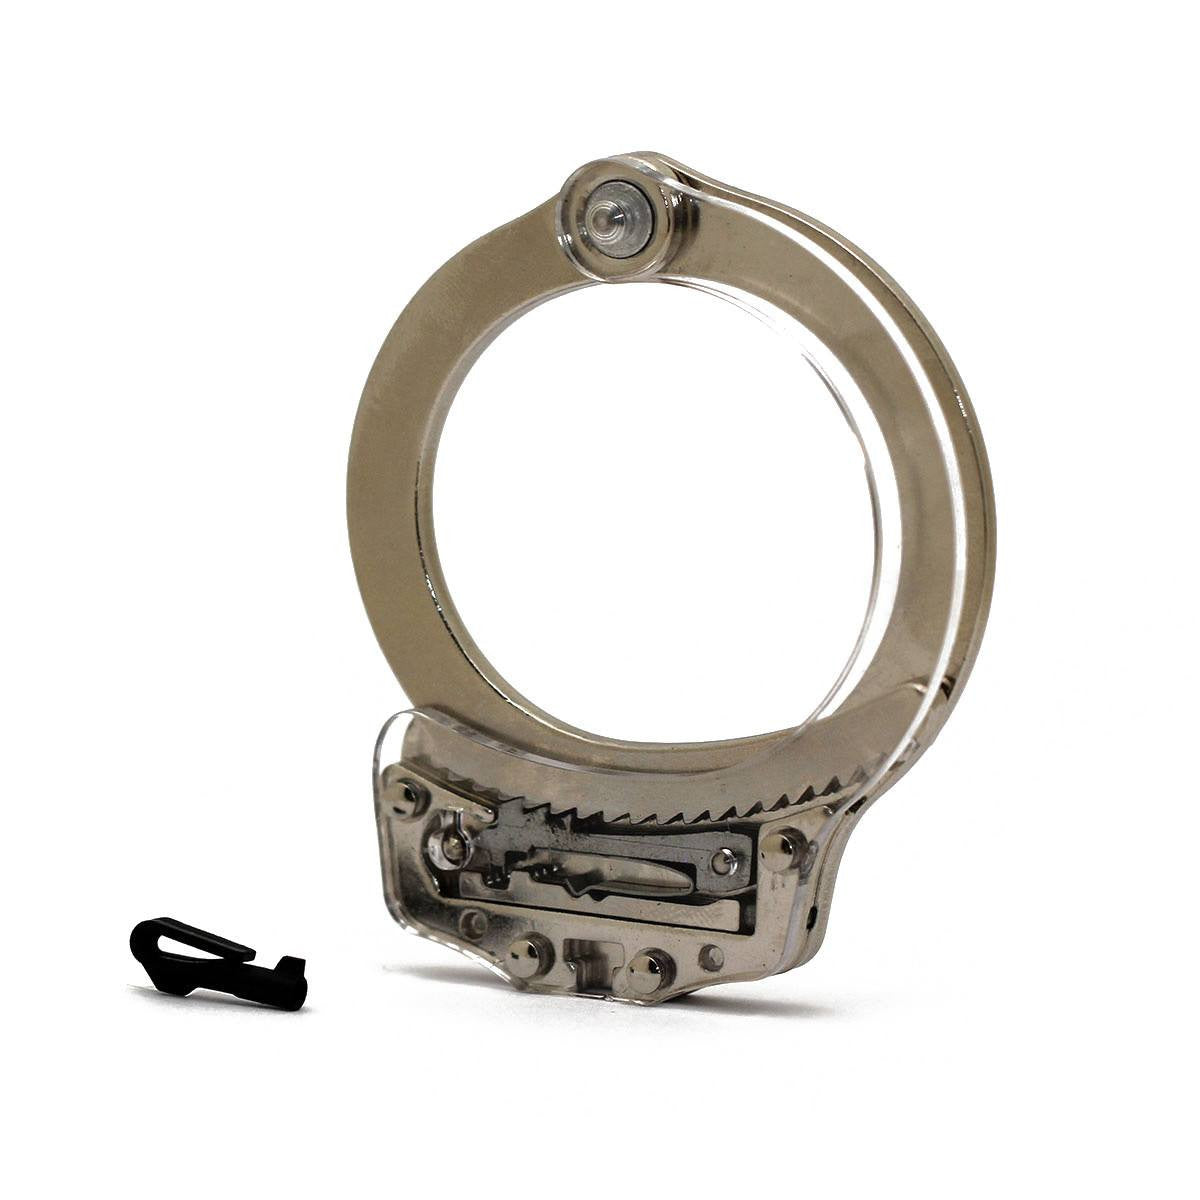 Czech Republic Handcuff Key (HC-CHC)